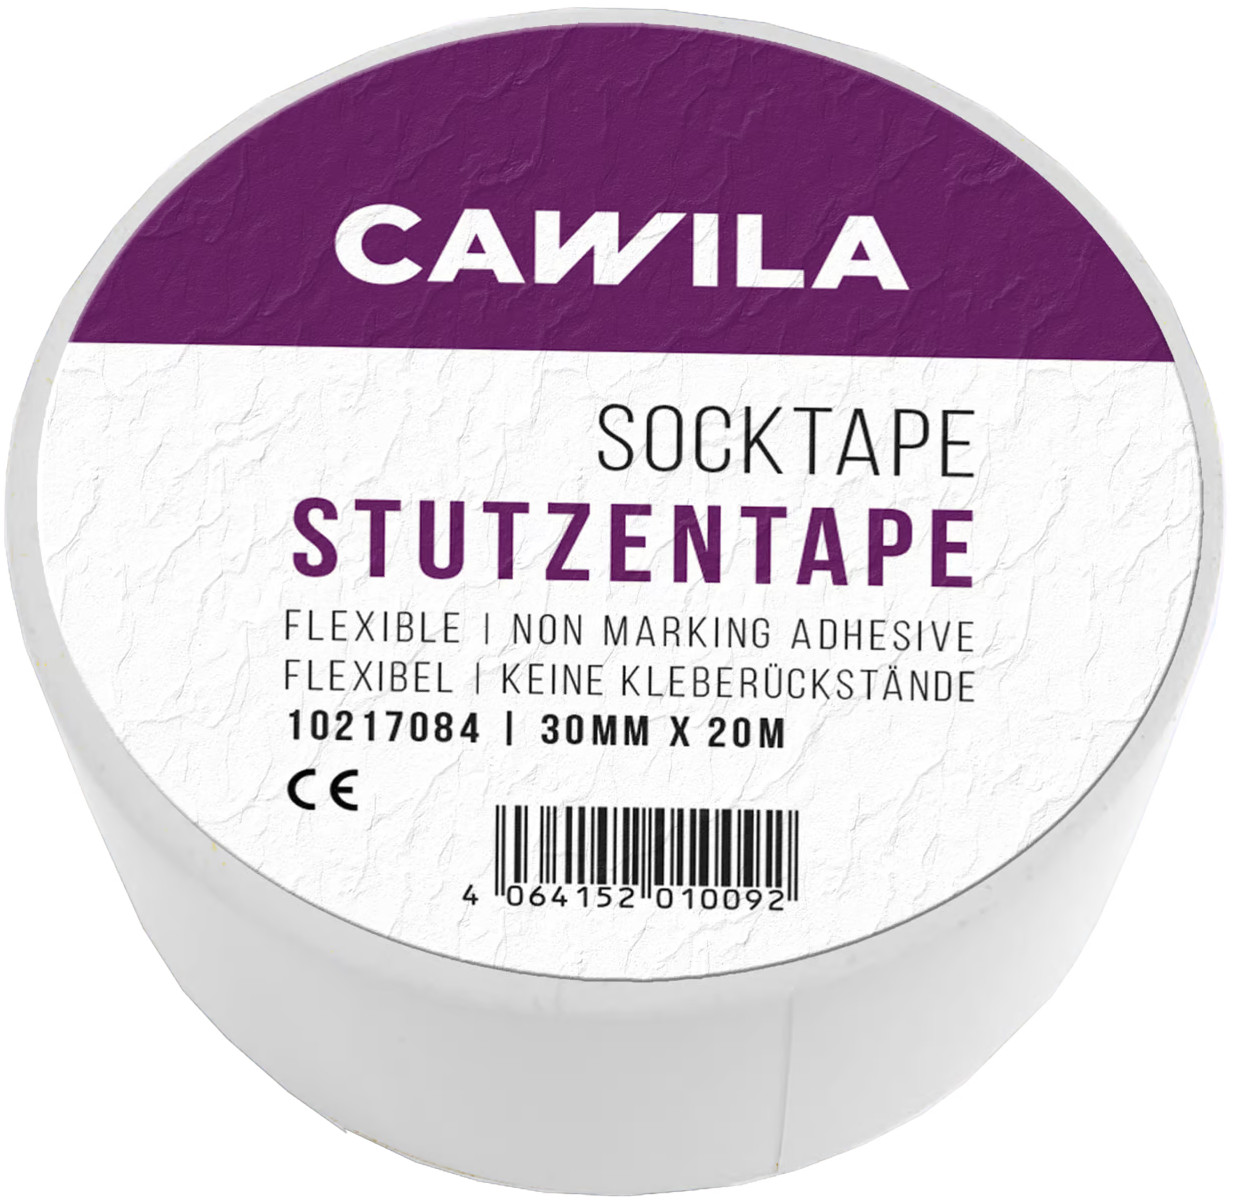 Tape-Band Cawila Sock Tape HOC 3 cm x 20 m